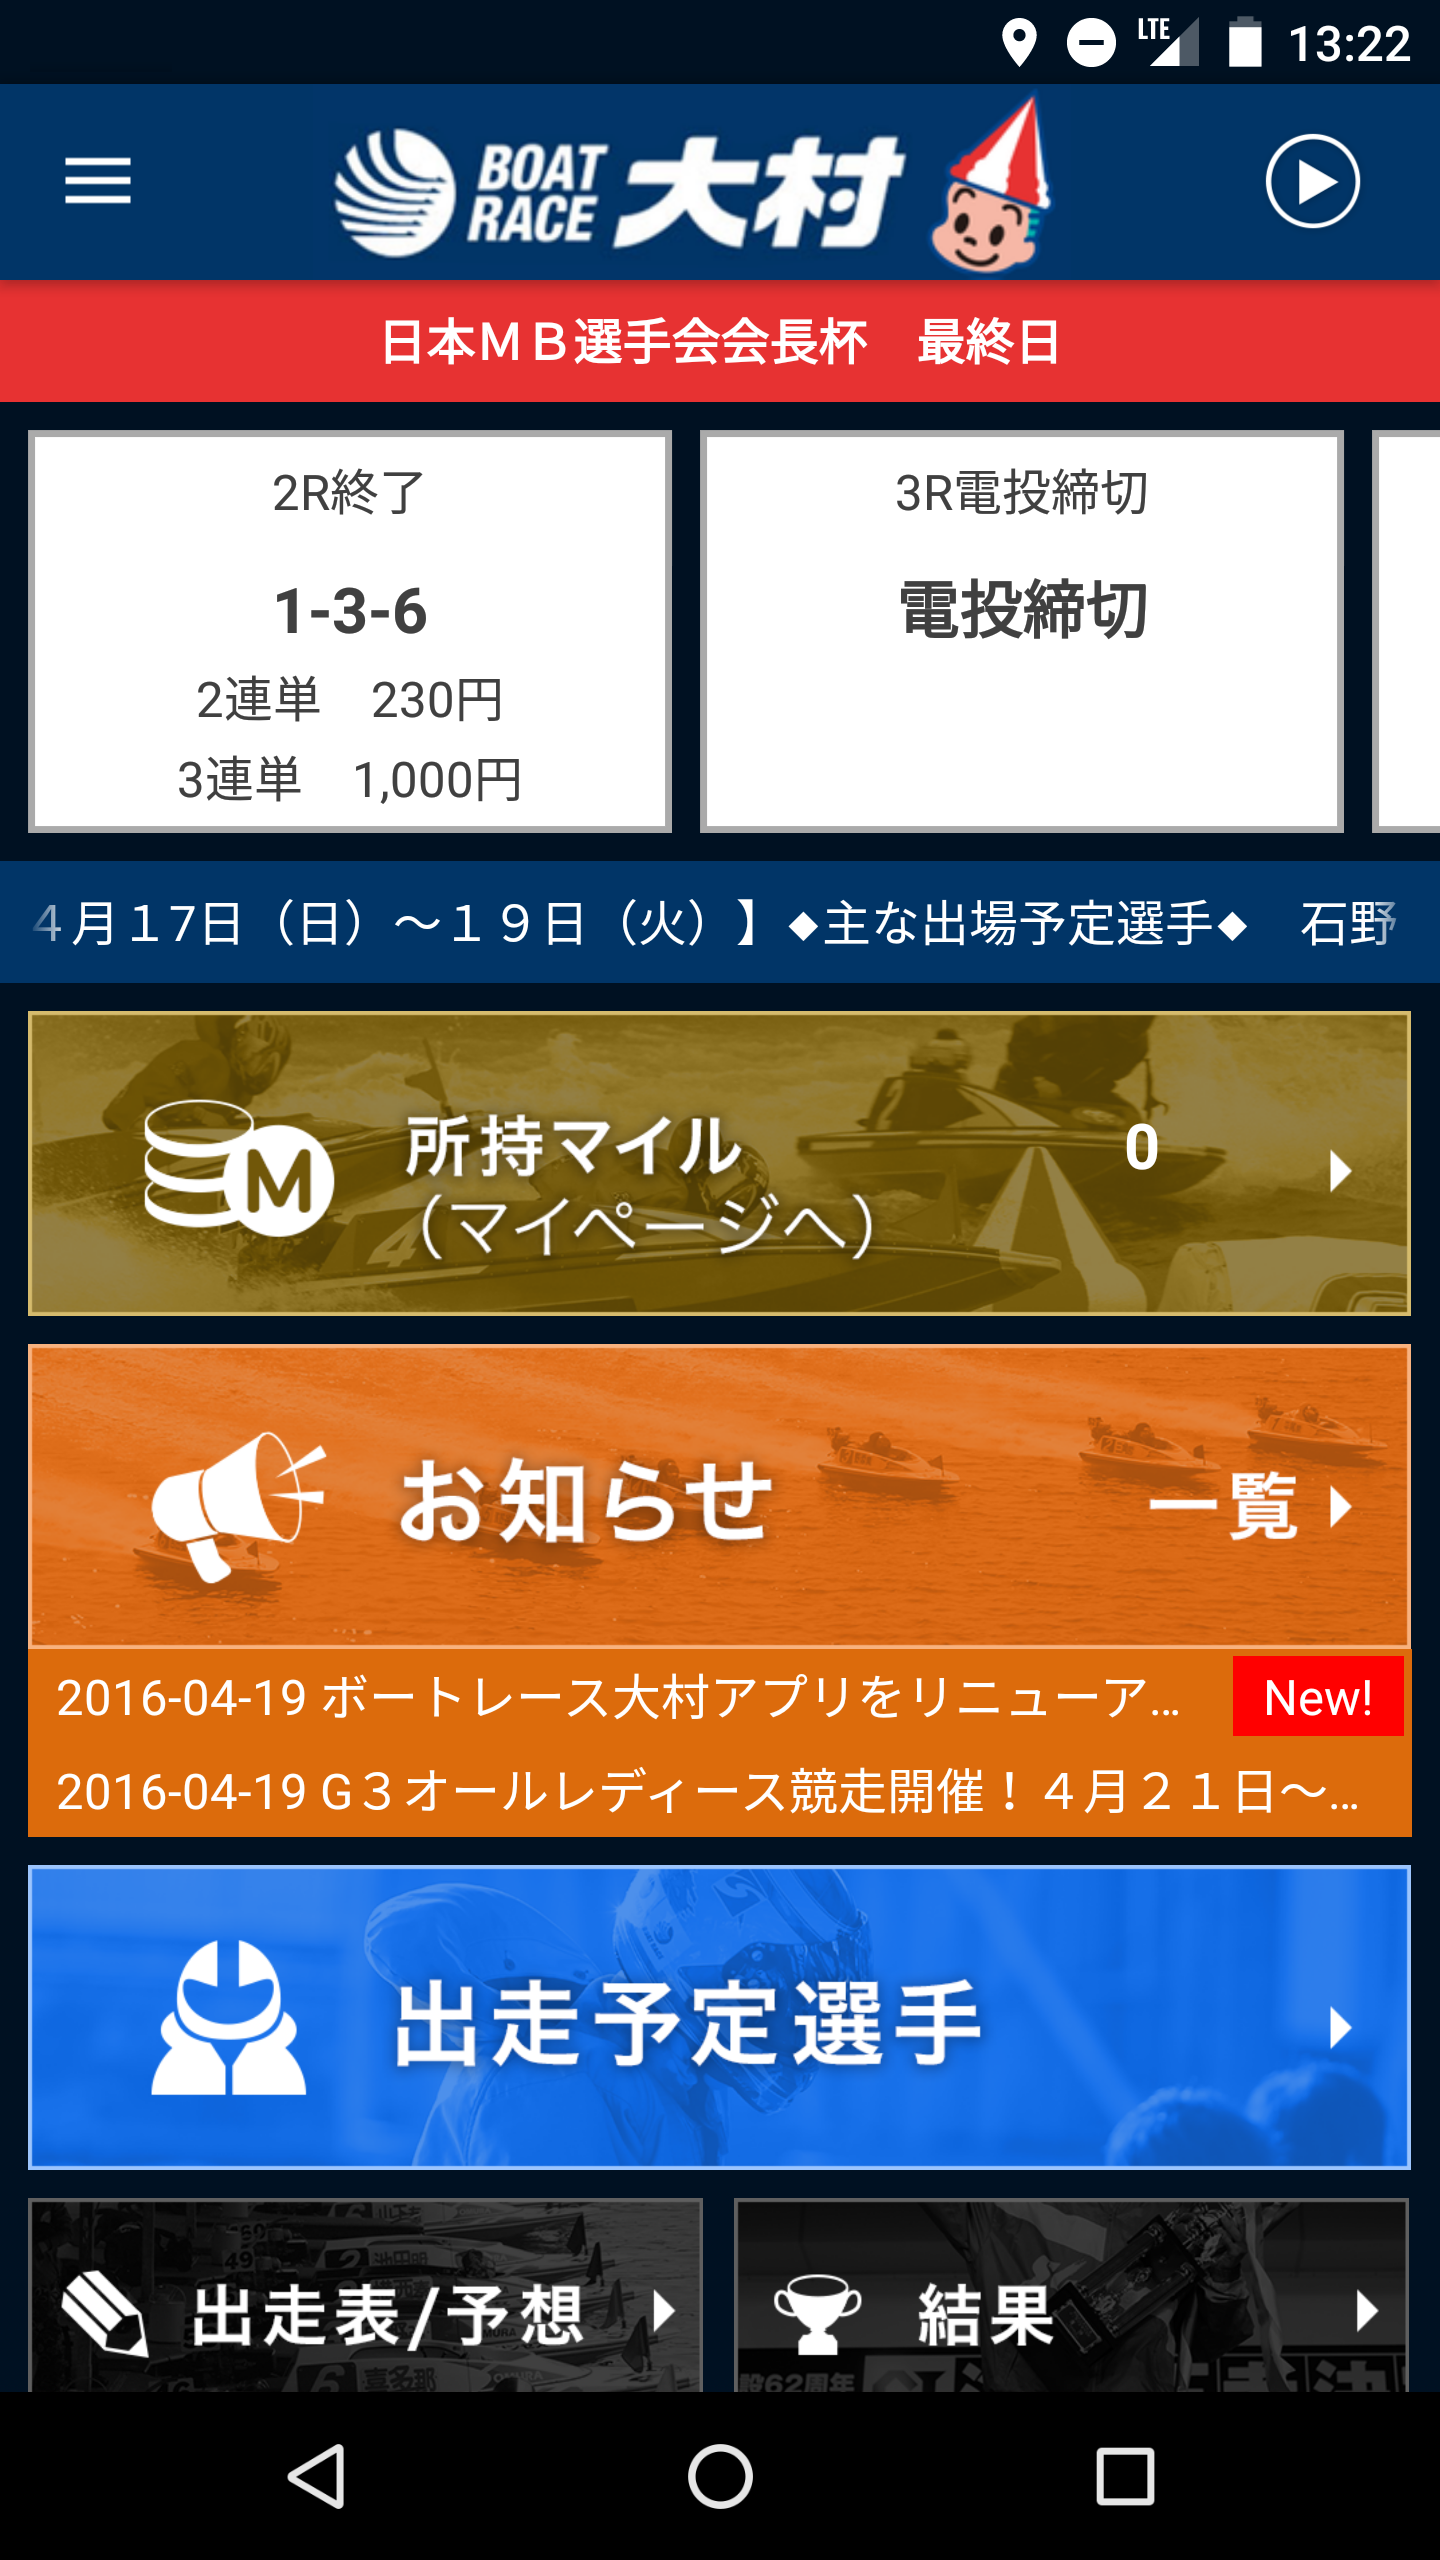 Android application ボートレース大村 公式アプリ screenshort